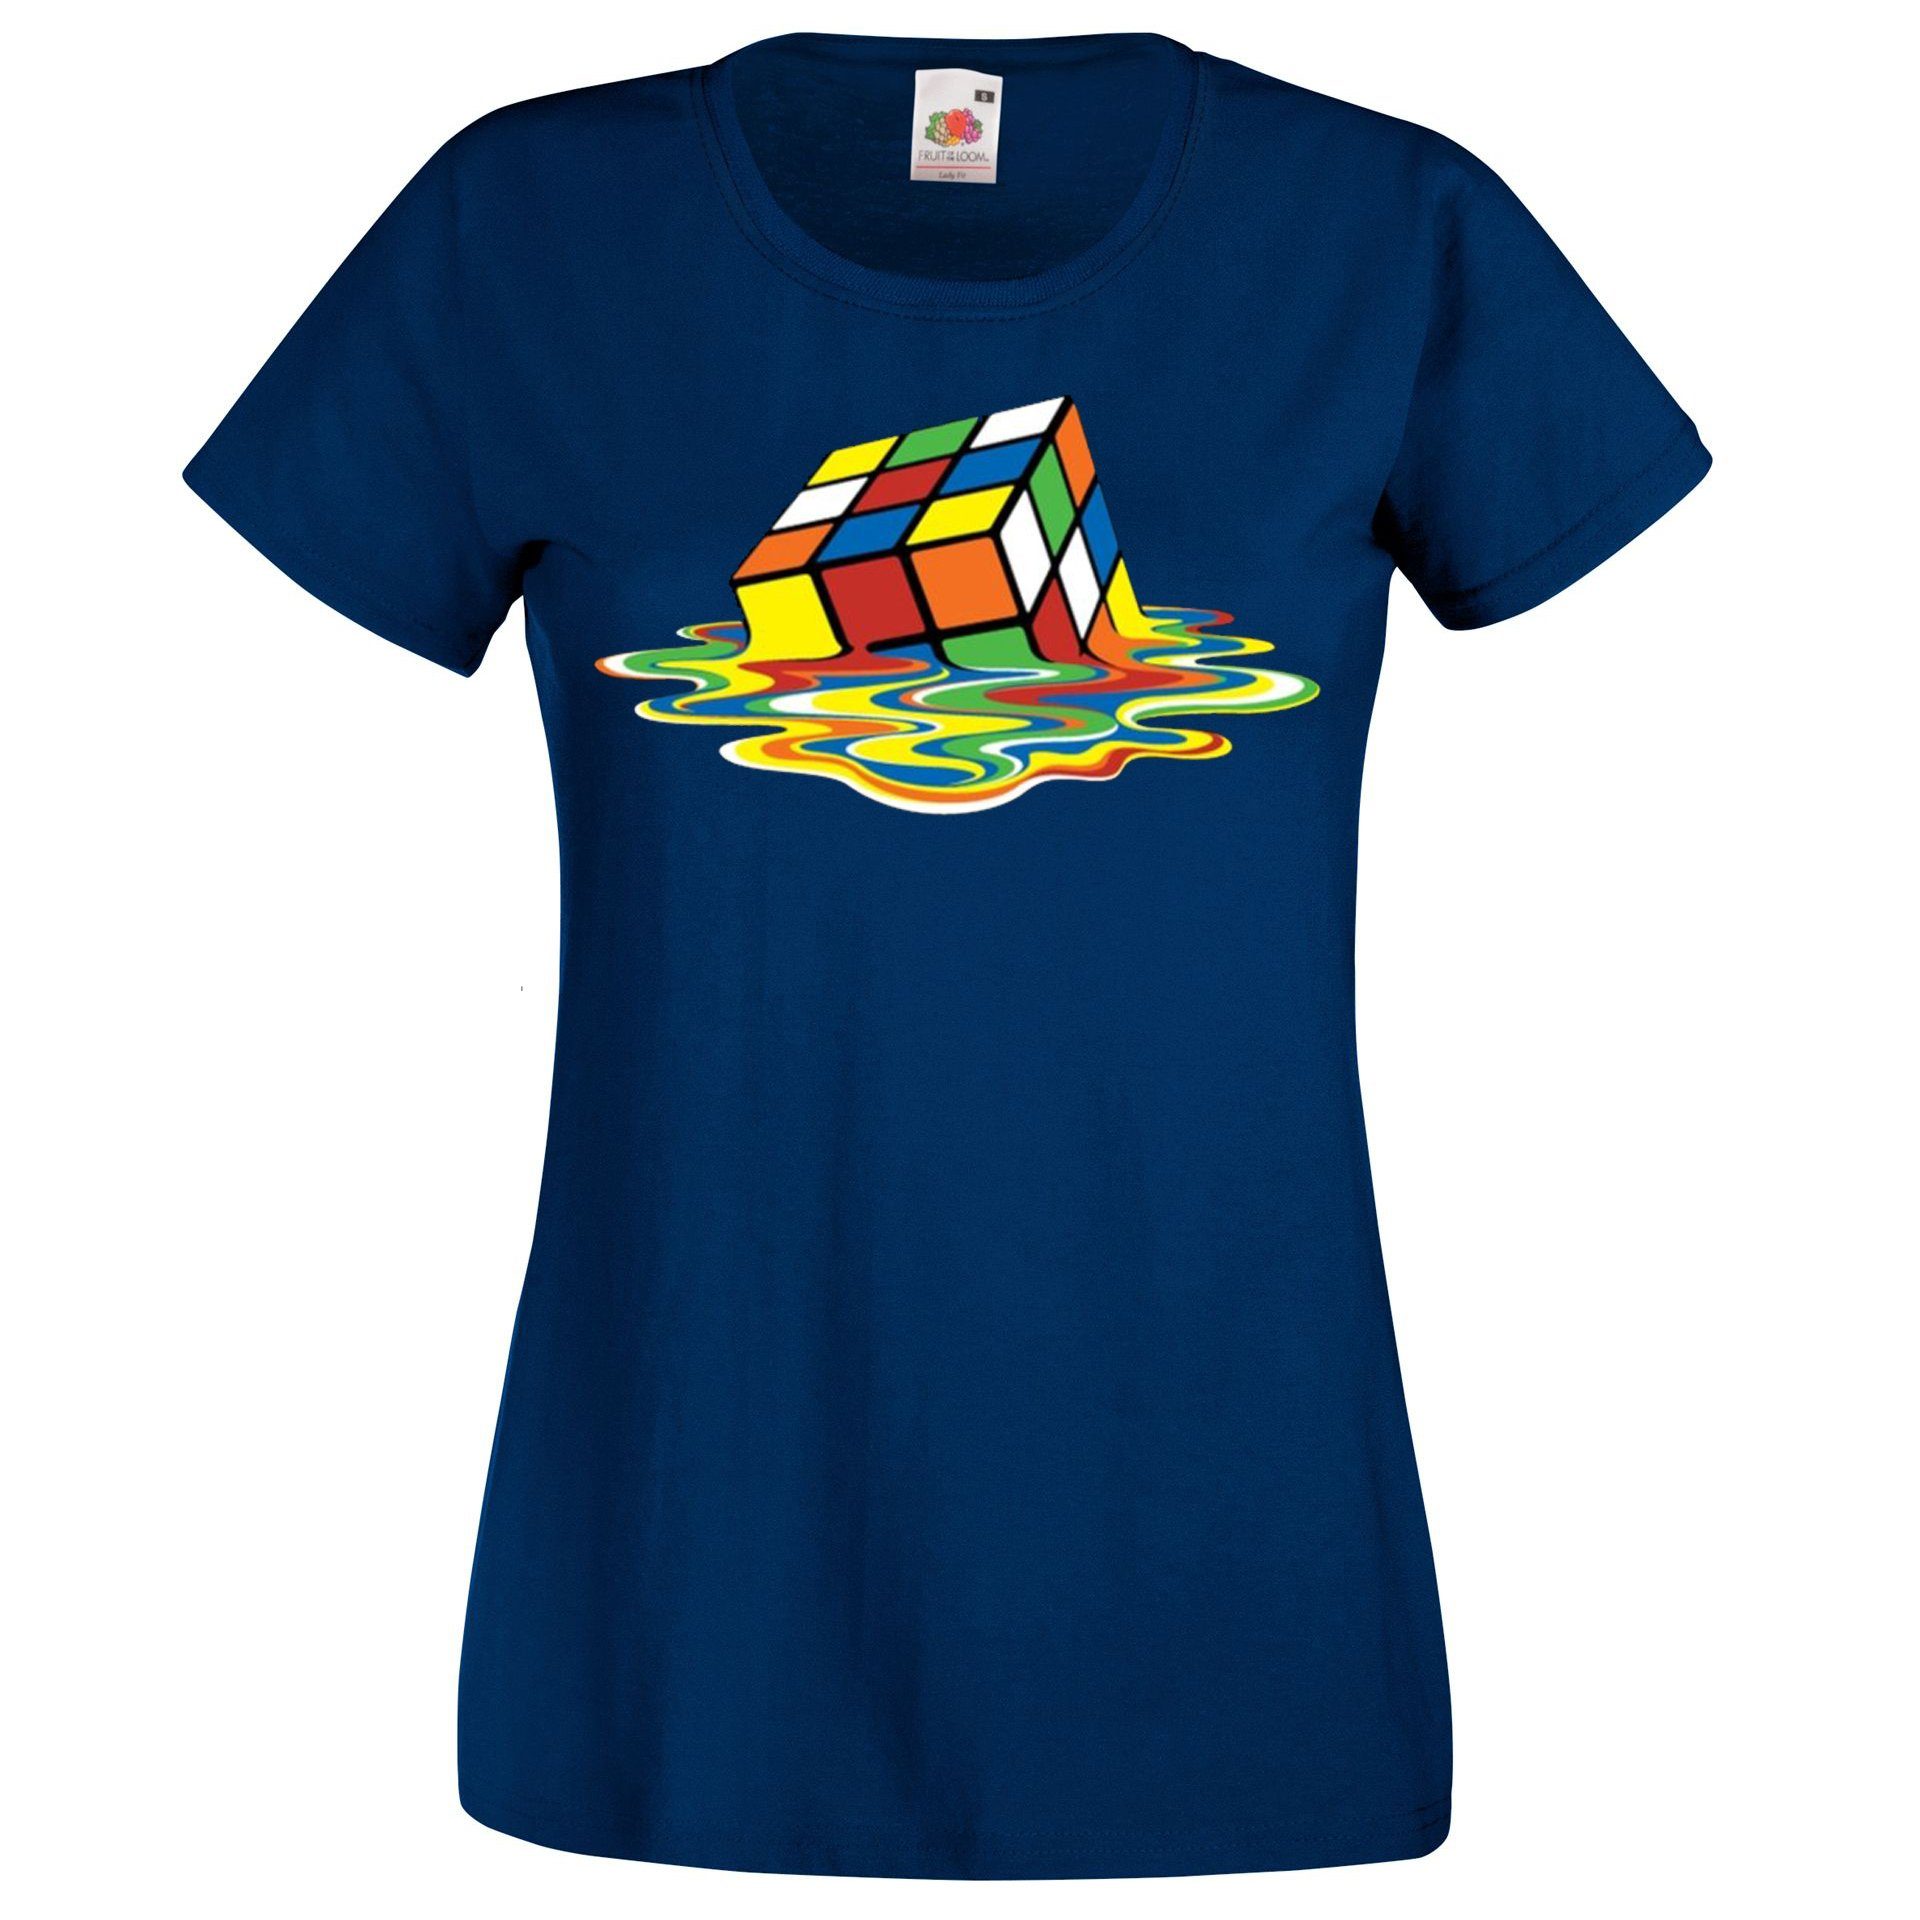 Youth Navyblau Shirt Zauberwürfel Damen witzigem Frontprint mit Designz T-Shirt